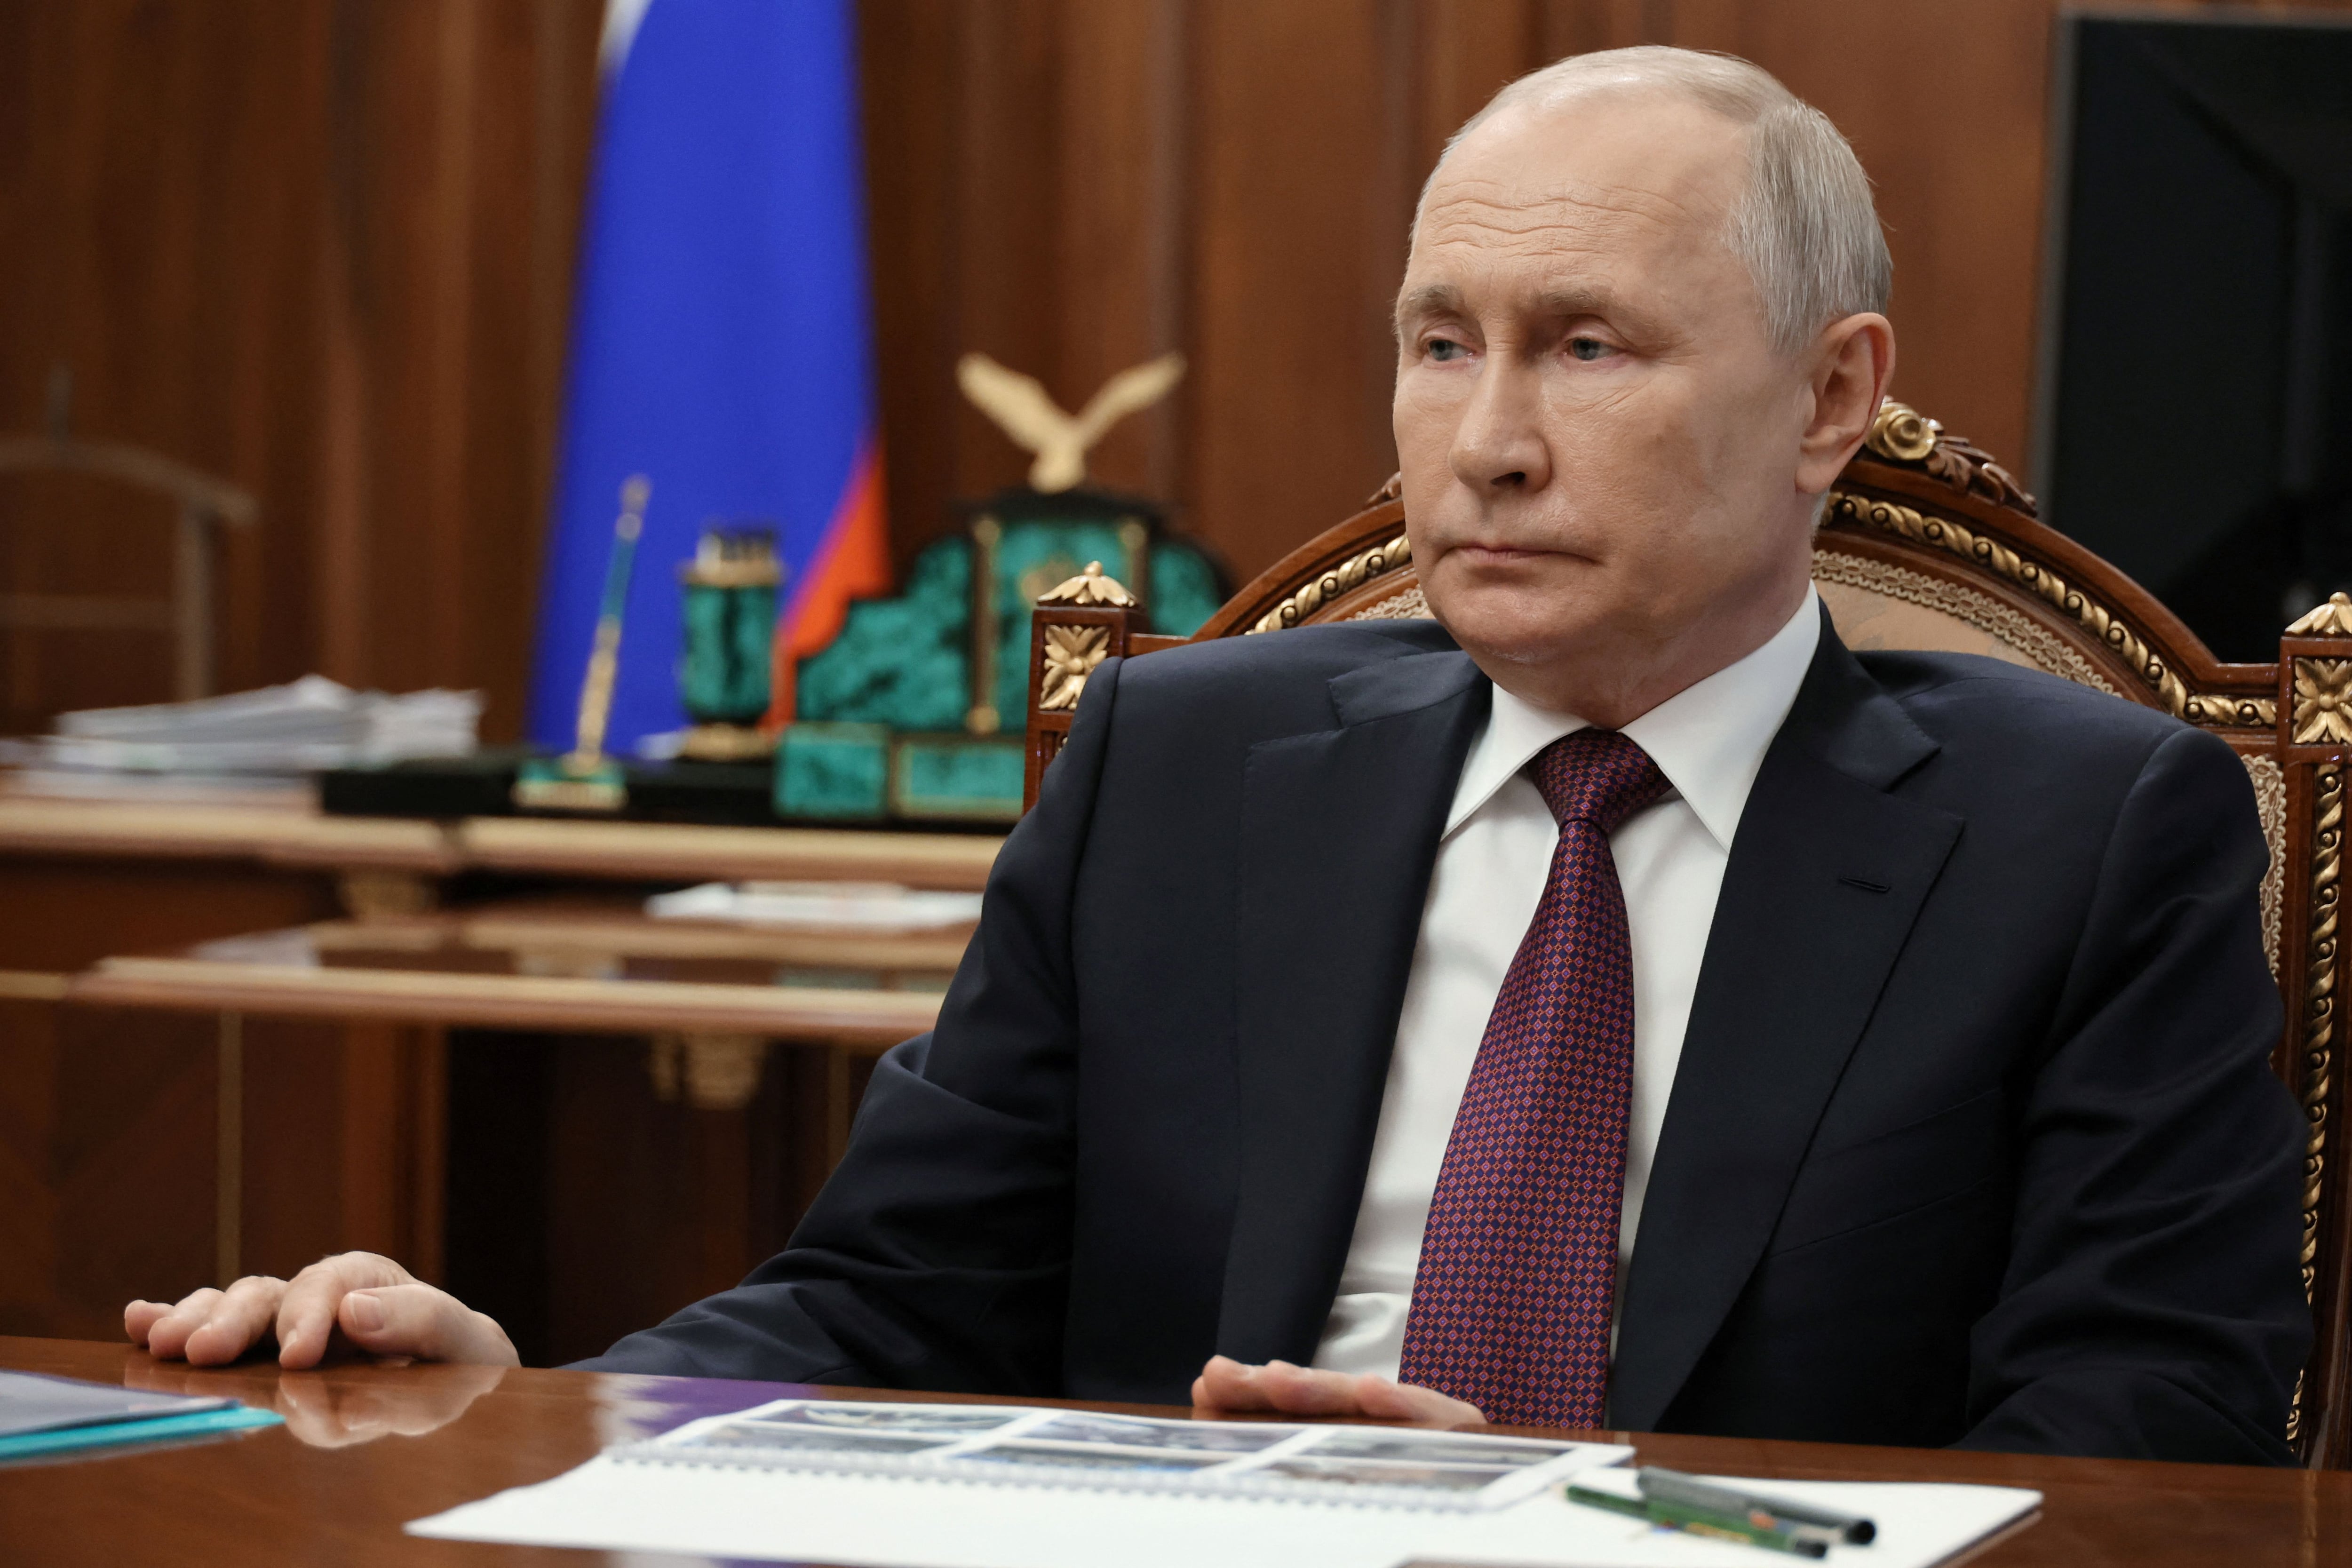 Vladimir Putin (Sputnik/Mikhail Klimentyev/Kremlin via REUTERS)